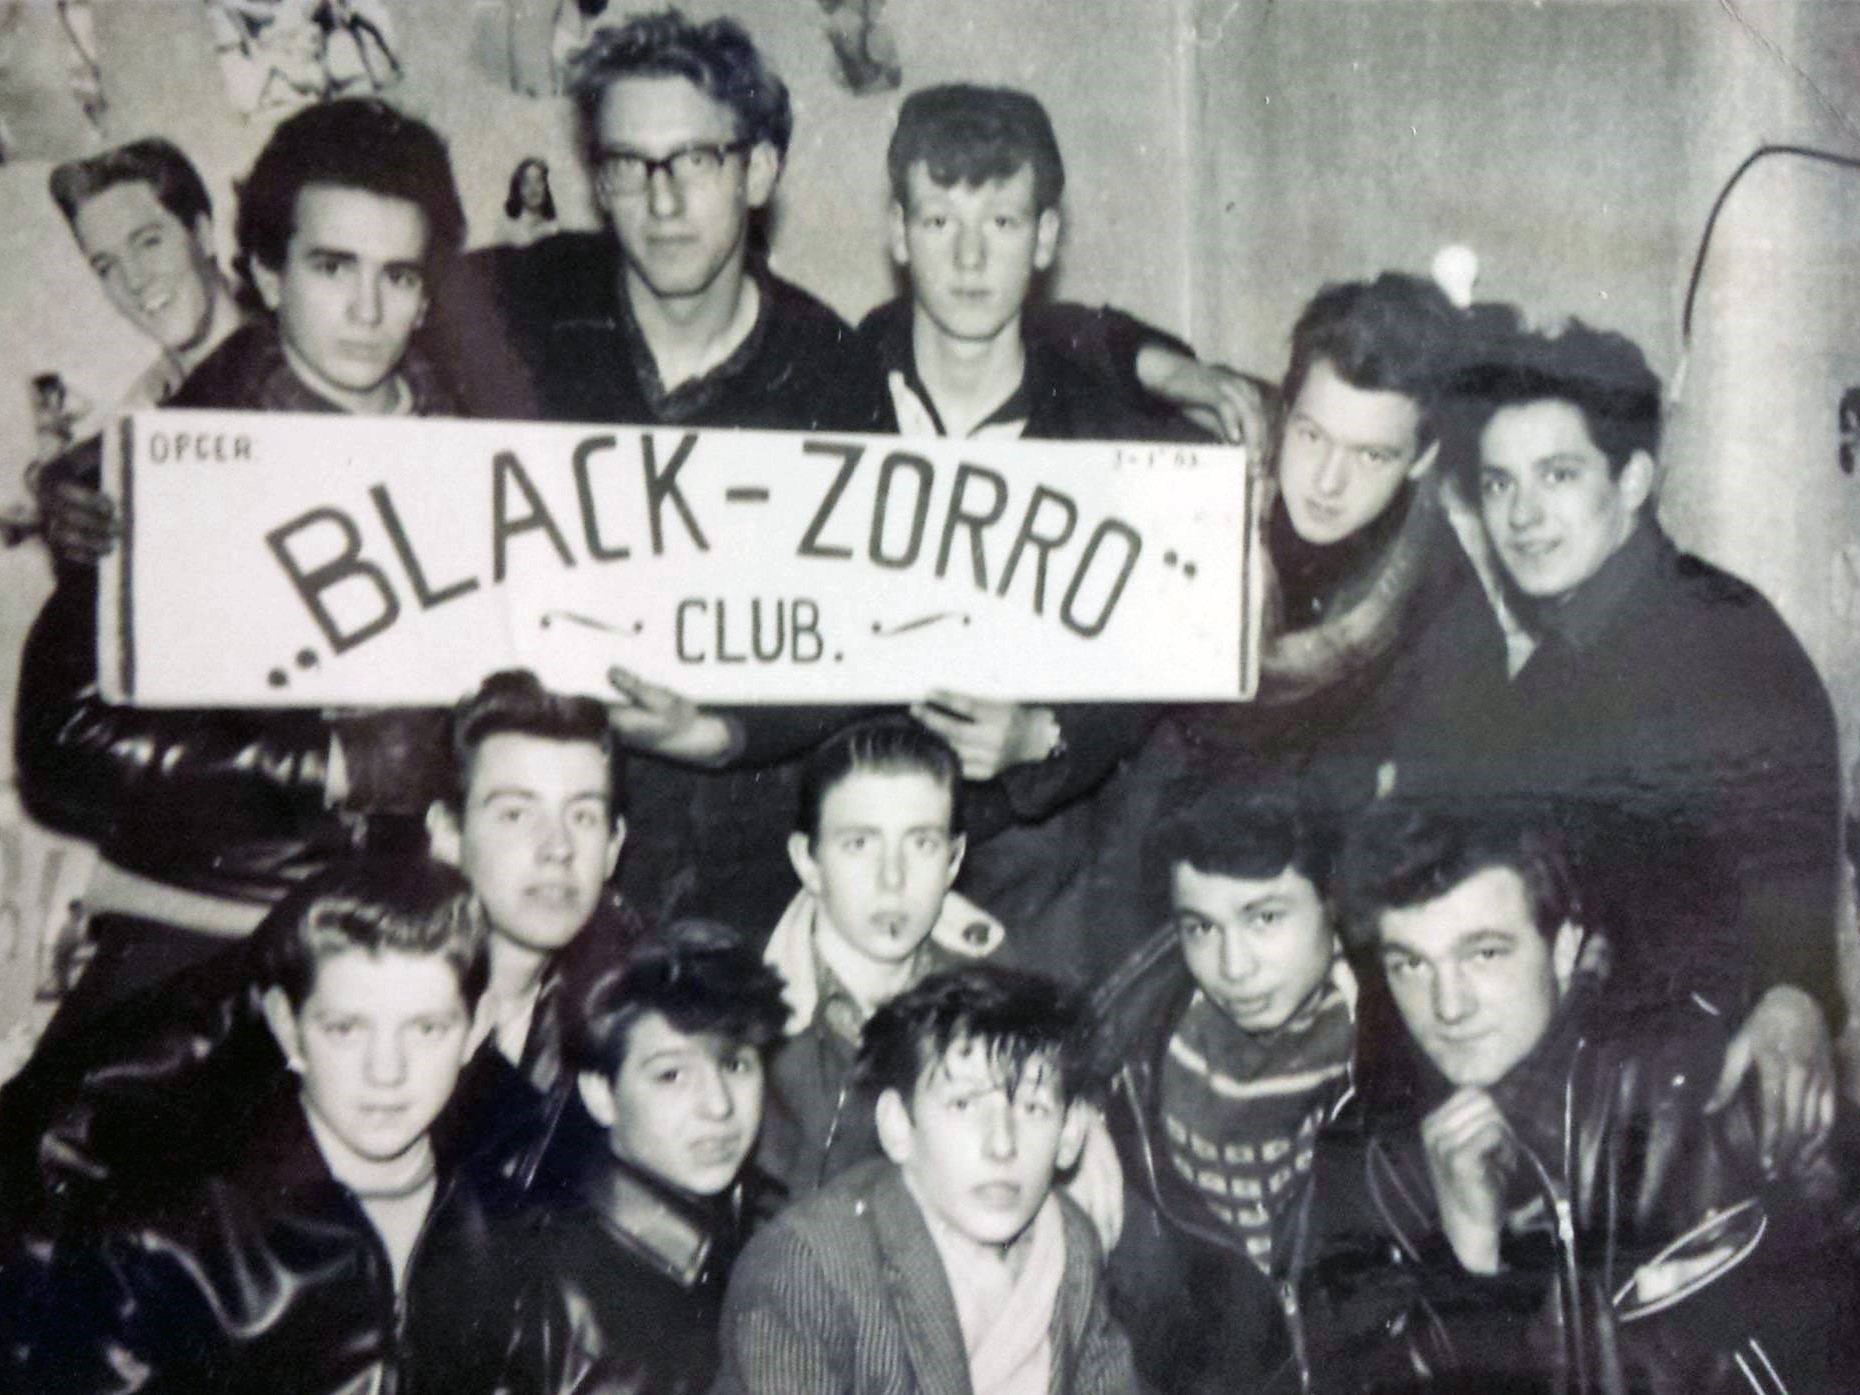 Black Zorro Club, Aalten